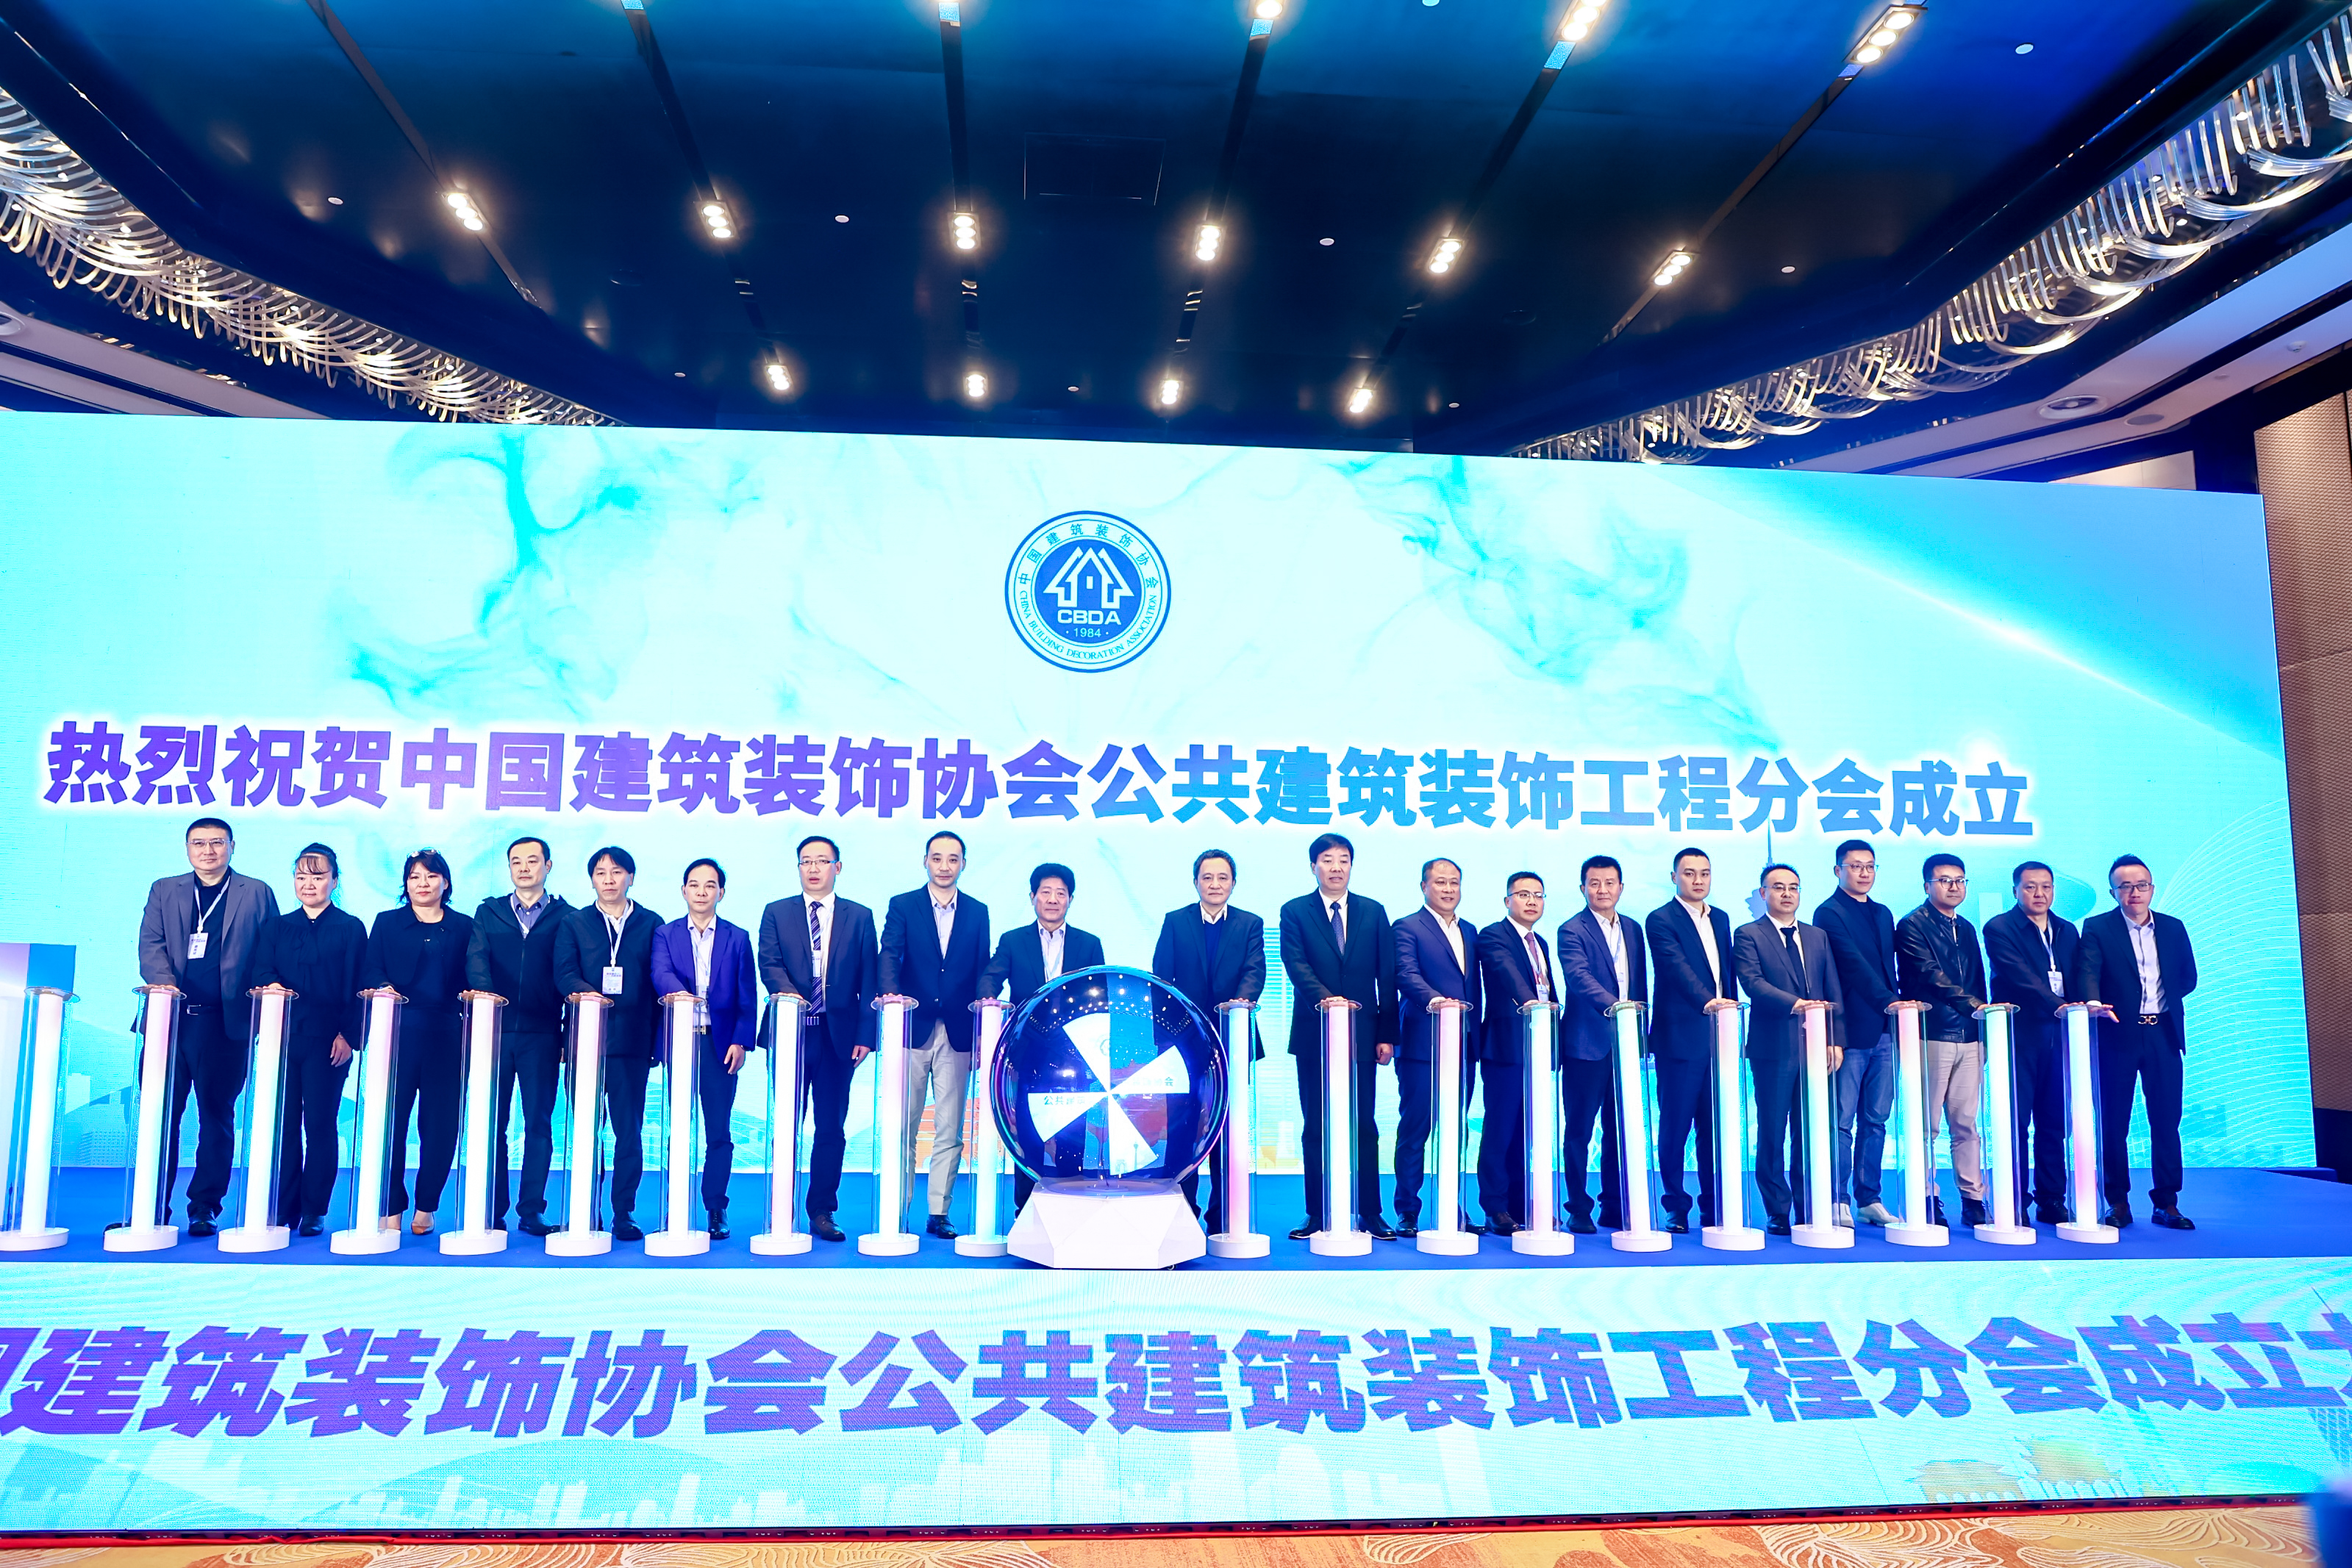 Congratulations to the establishment of China Building Decoration Association public building decora